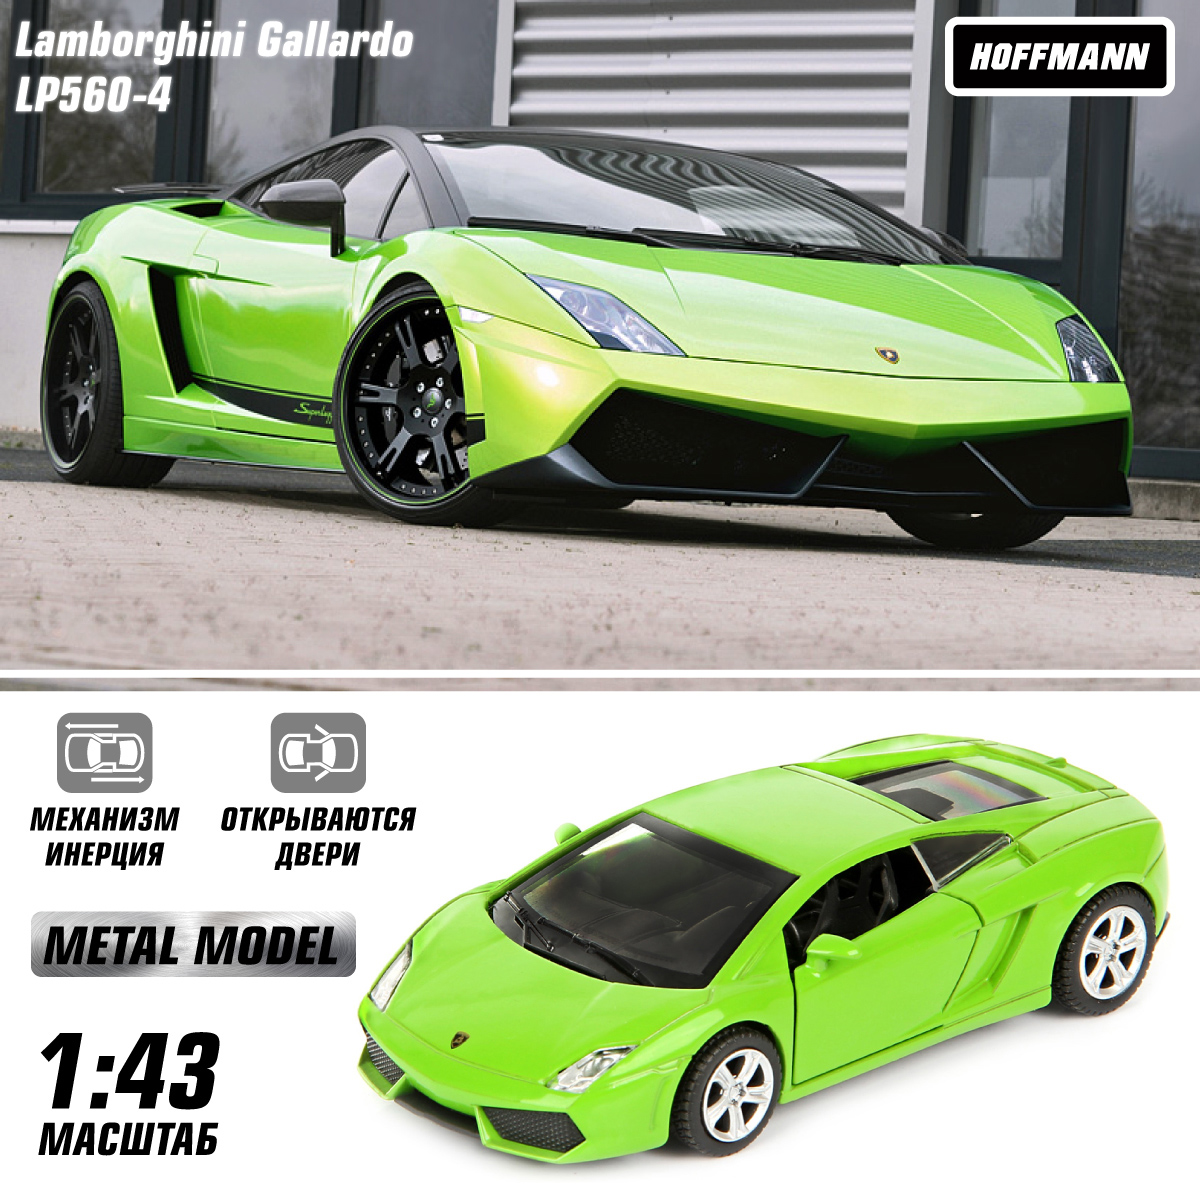 Машинка HOFFMANN 1:43 Lamborghini Gallardo LP560-4 металлическая 58018 - фото 1